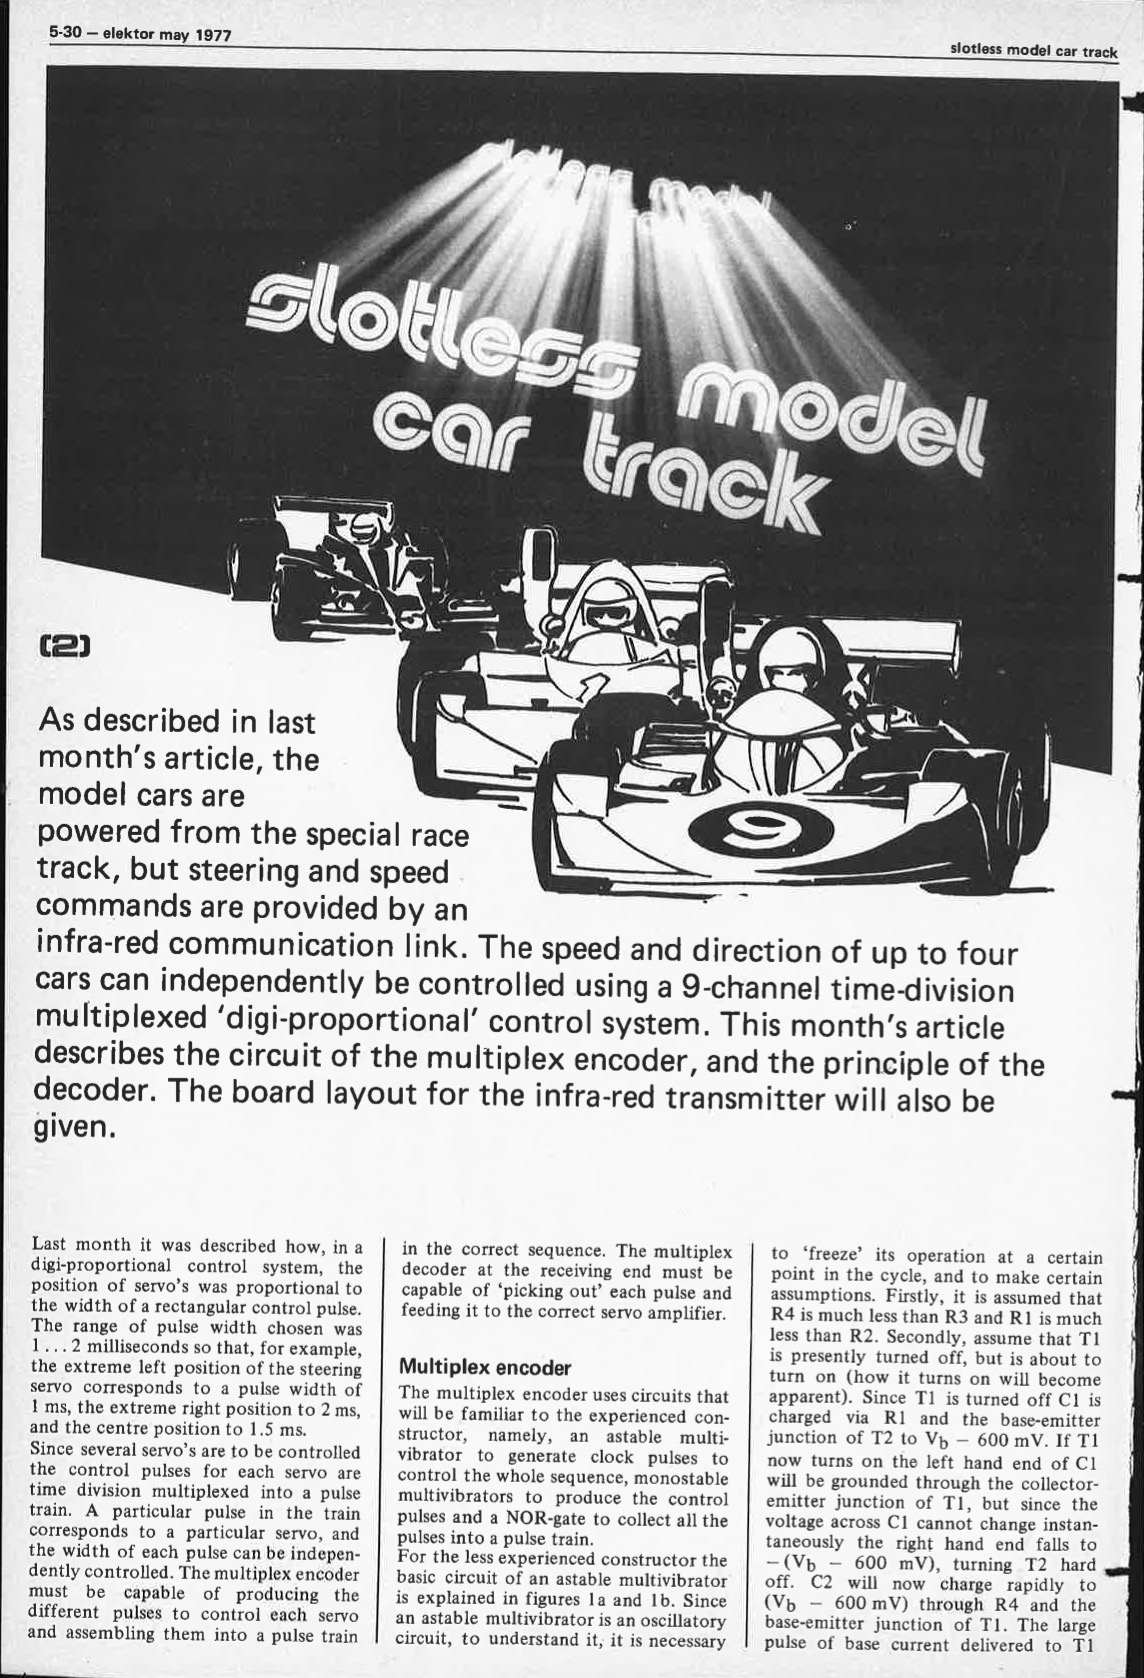 slotless model car track (2)